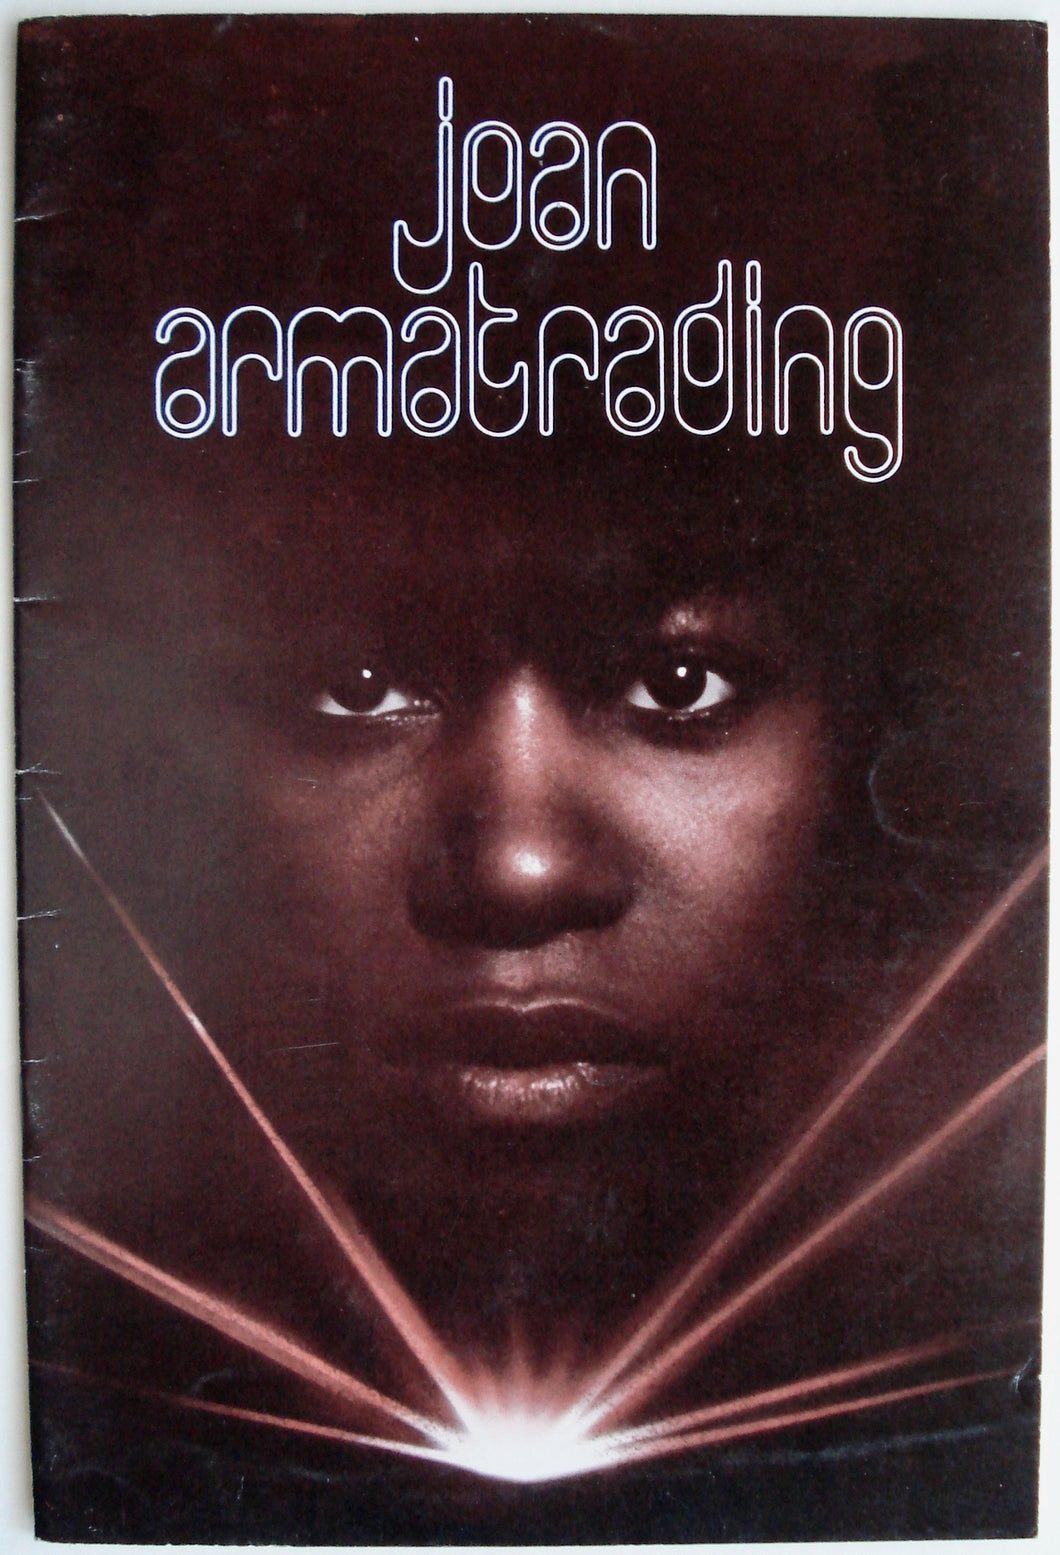 Joan Armatrading - 1979